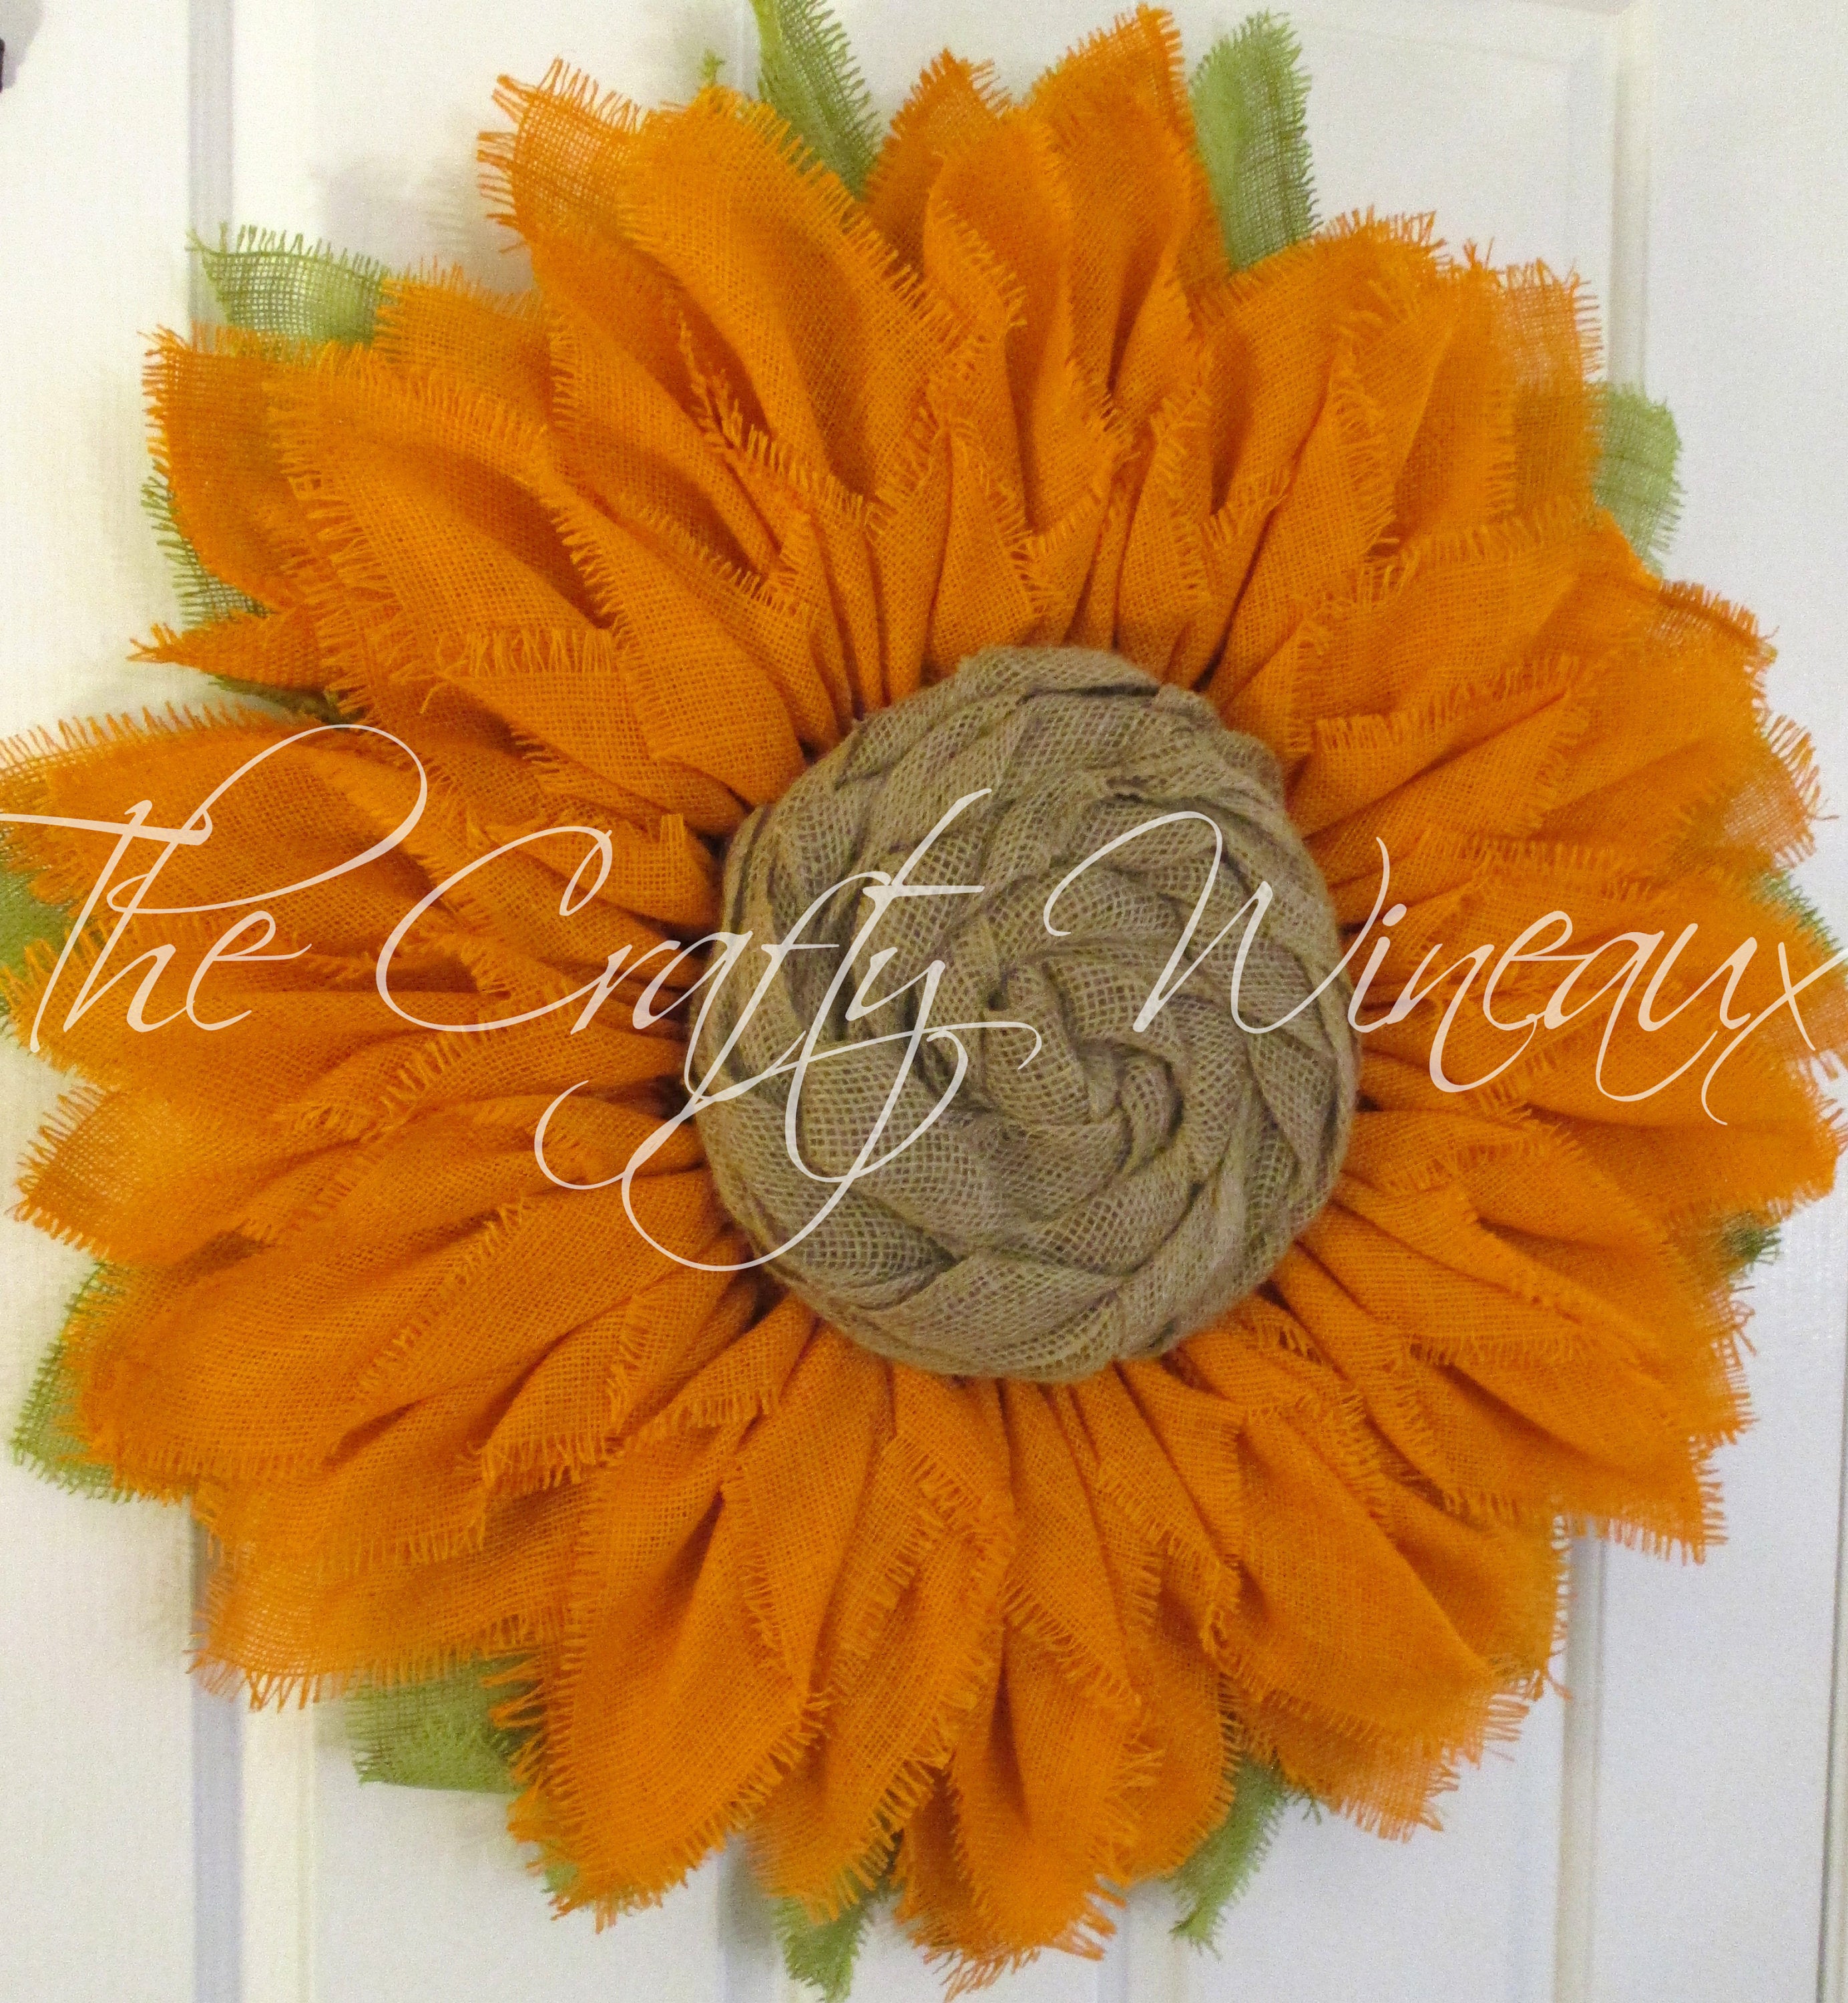 Buy vibrant Sunflower & Daisy silk flower accent at Petals.